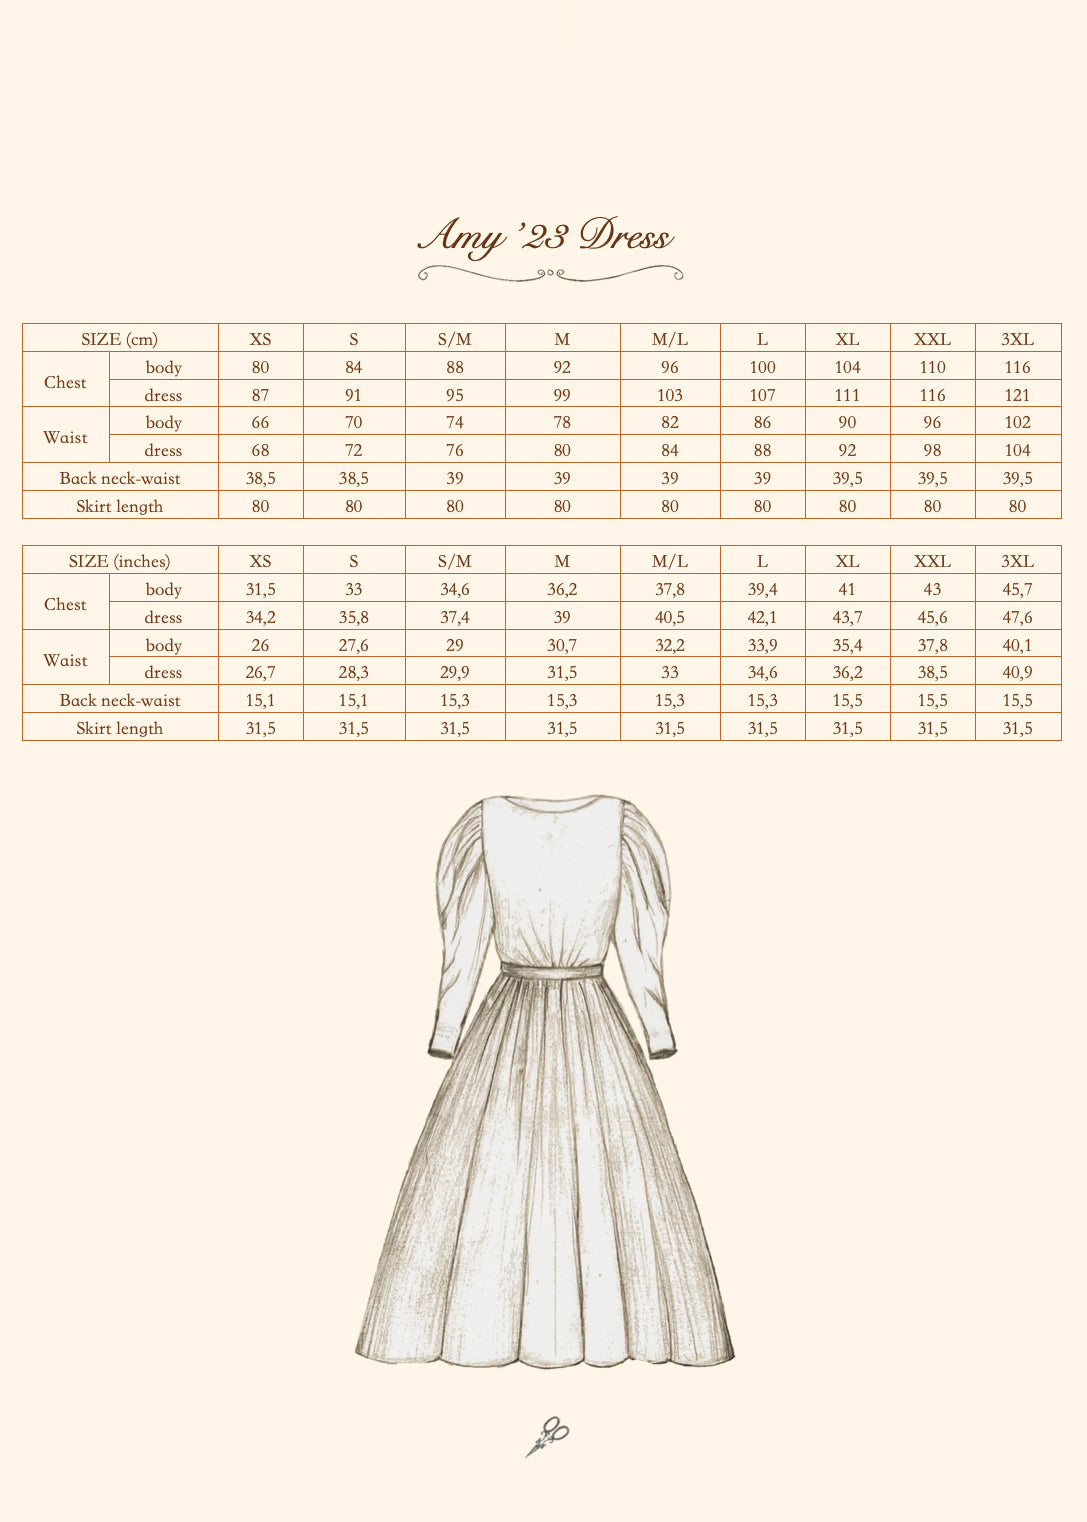 The Amy’23 Dress